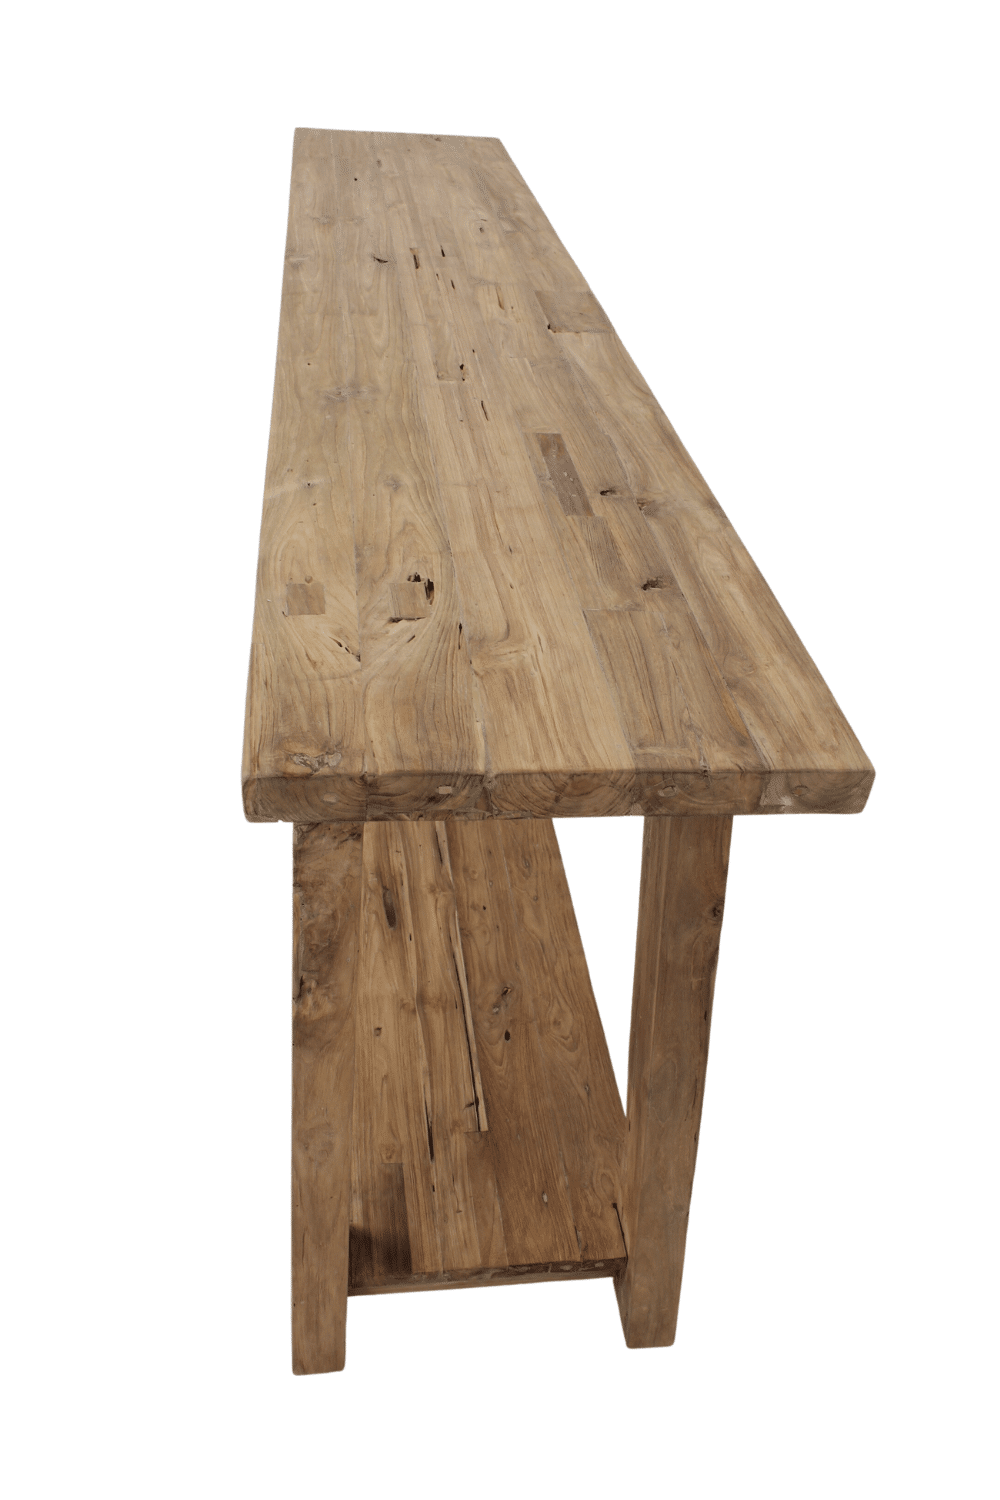 Landelijke teak houten sidetable 240 cm lang